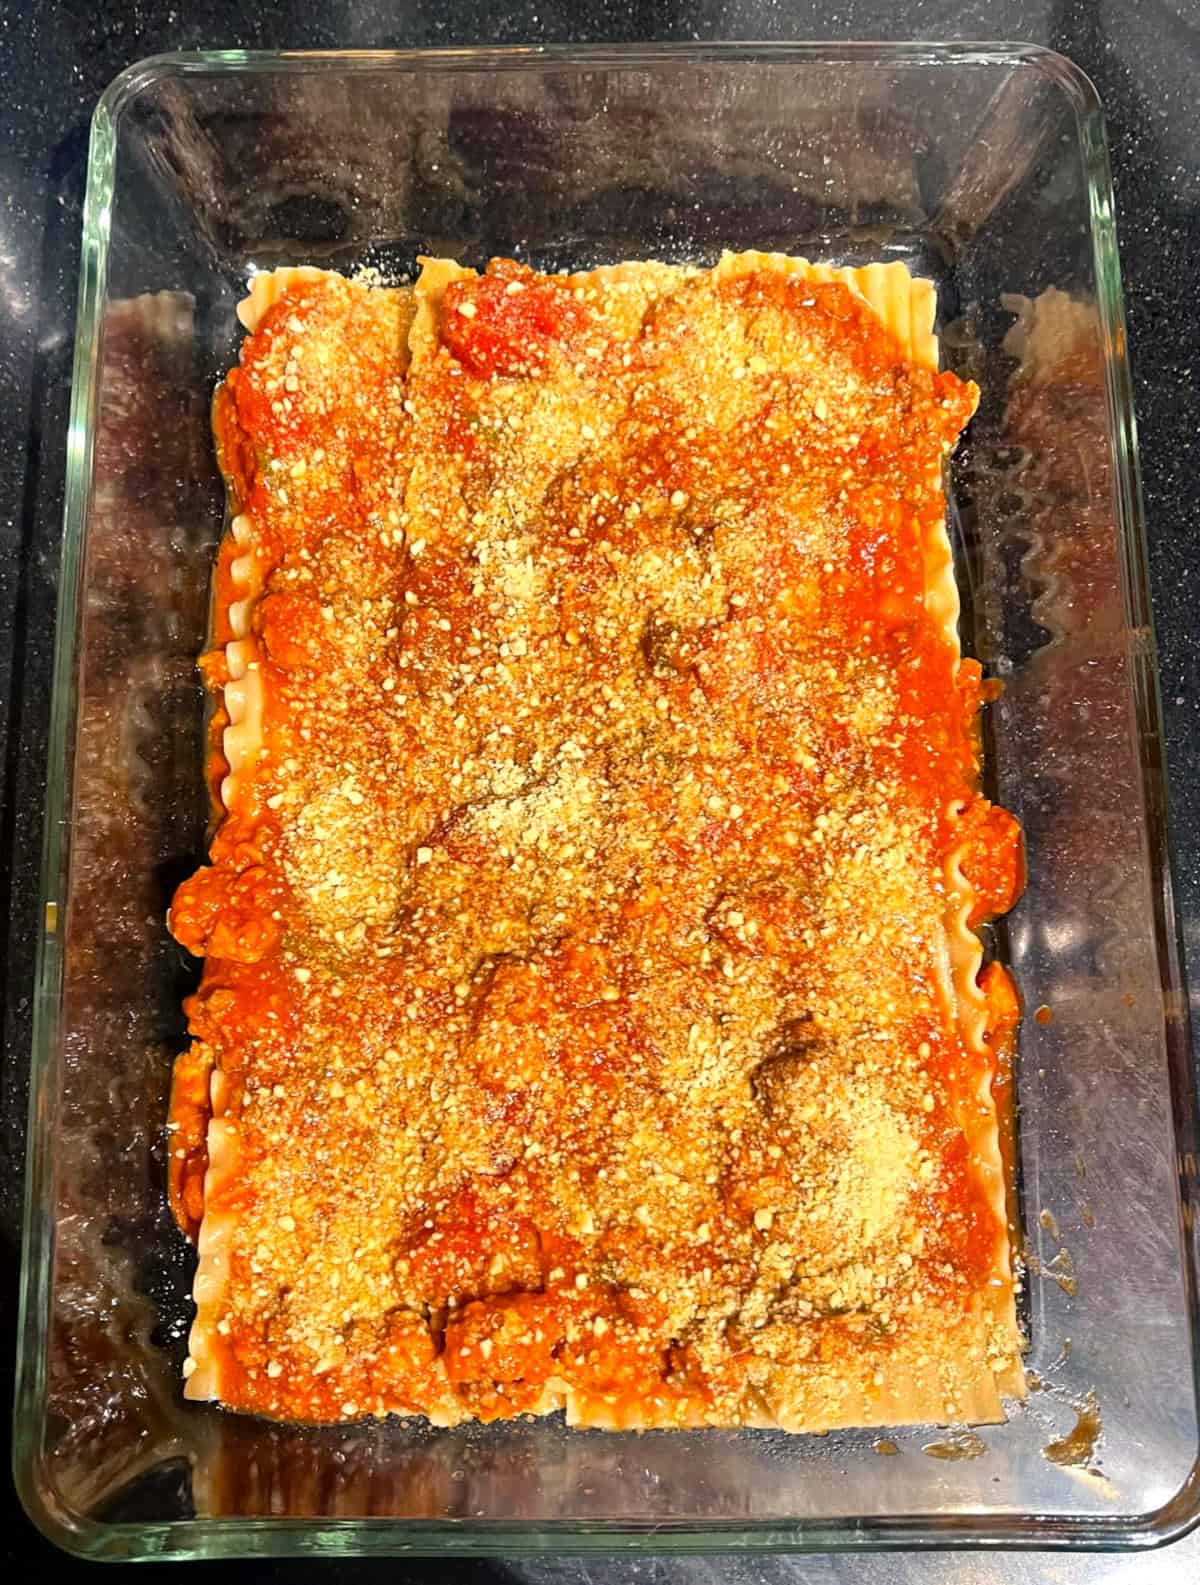 Vegan parmesan layered over tomato marinara.